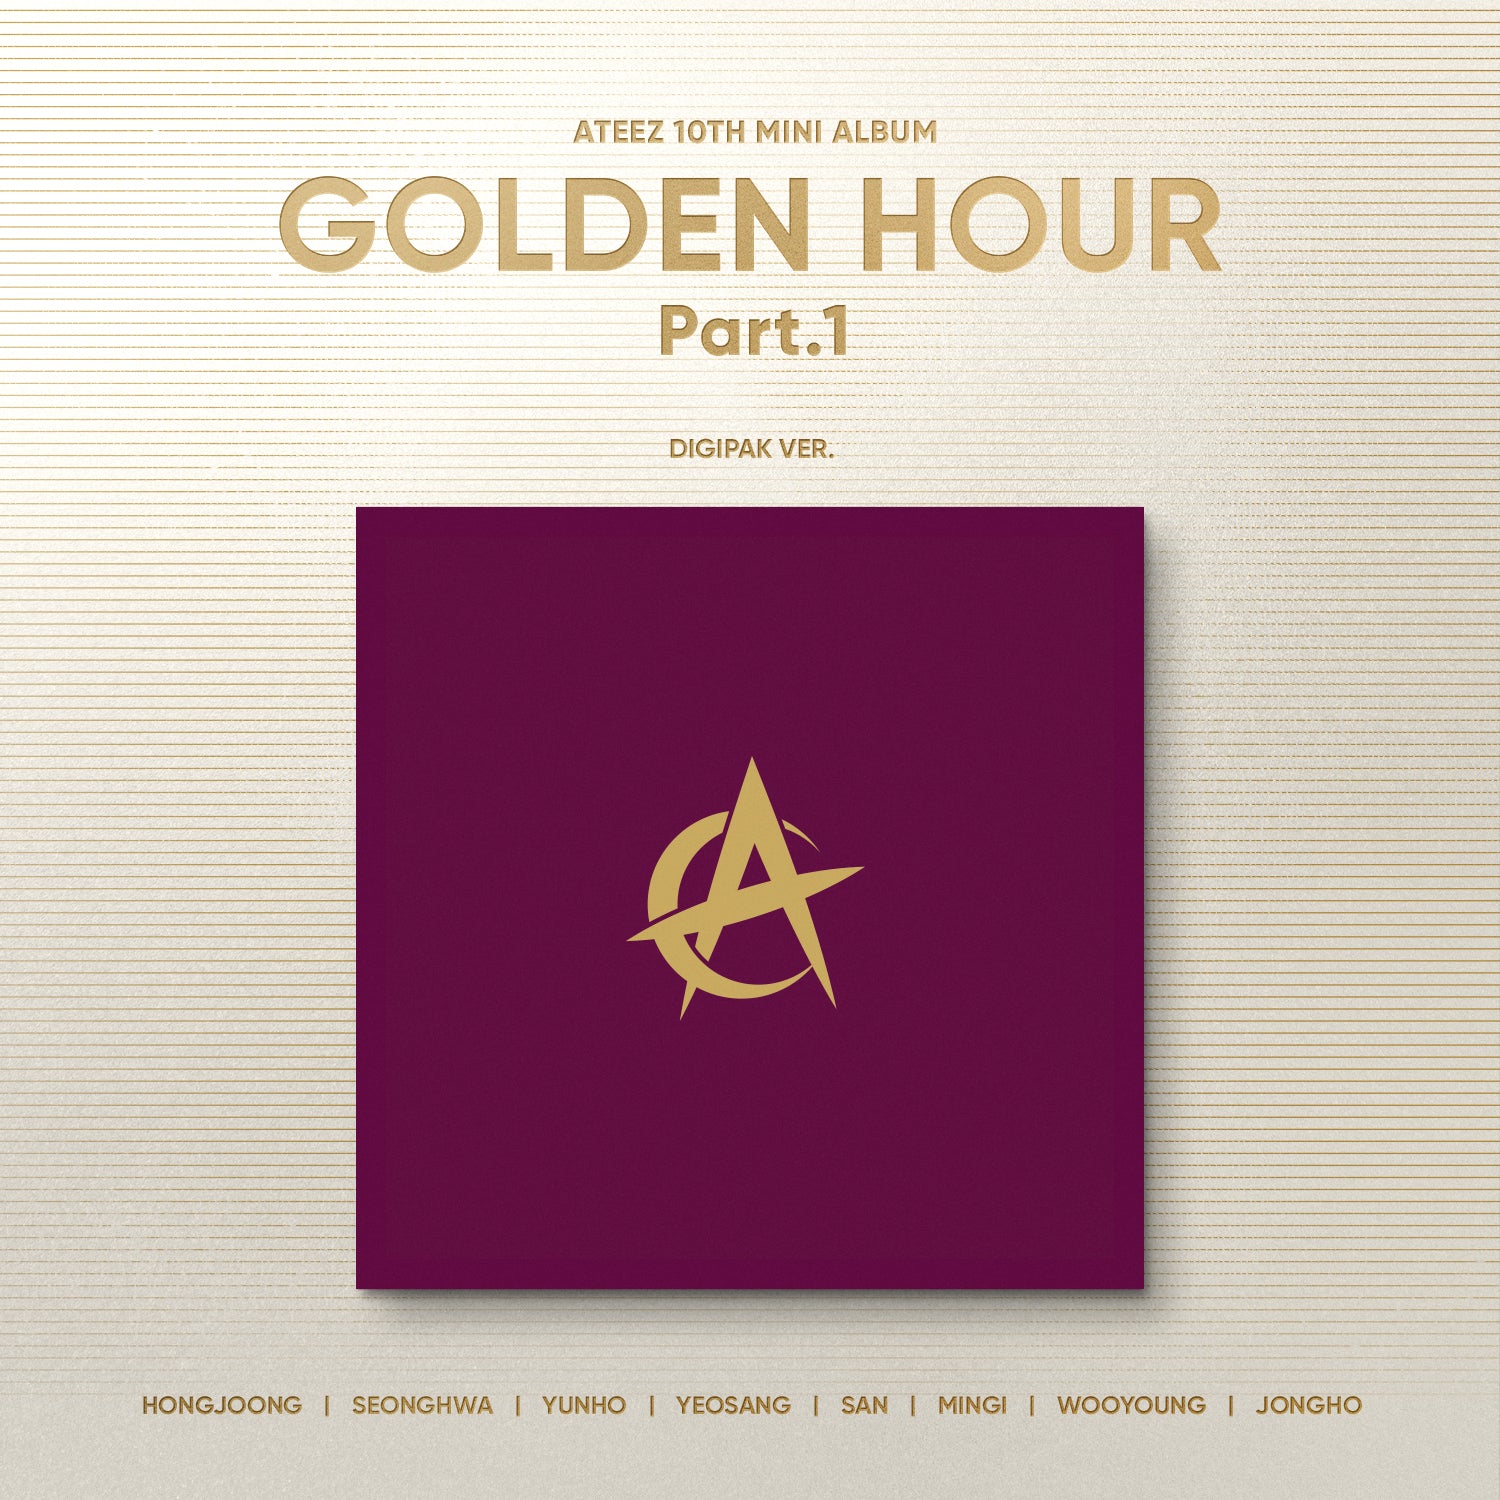 [PRE-ORDER] ATEEZ - GOLDEN HOUR : Part.1 (Digipak VER.)